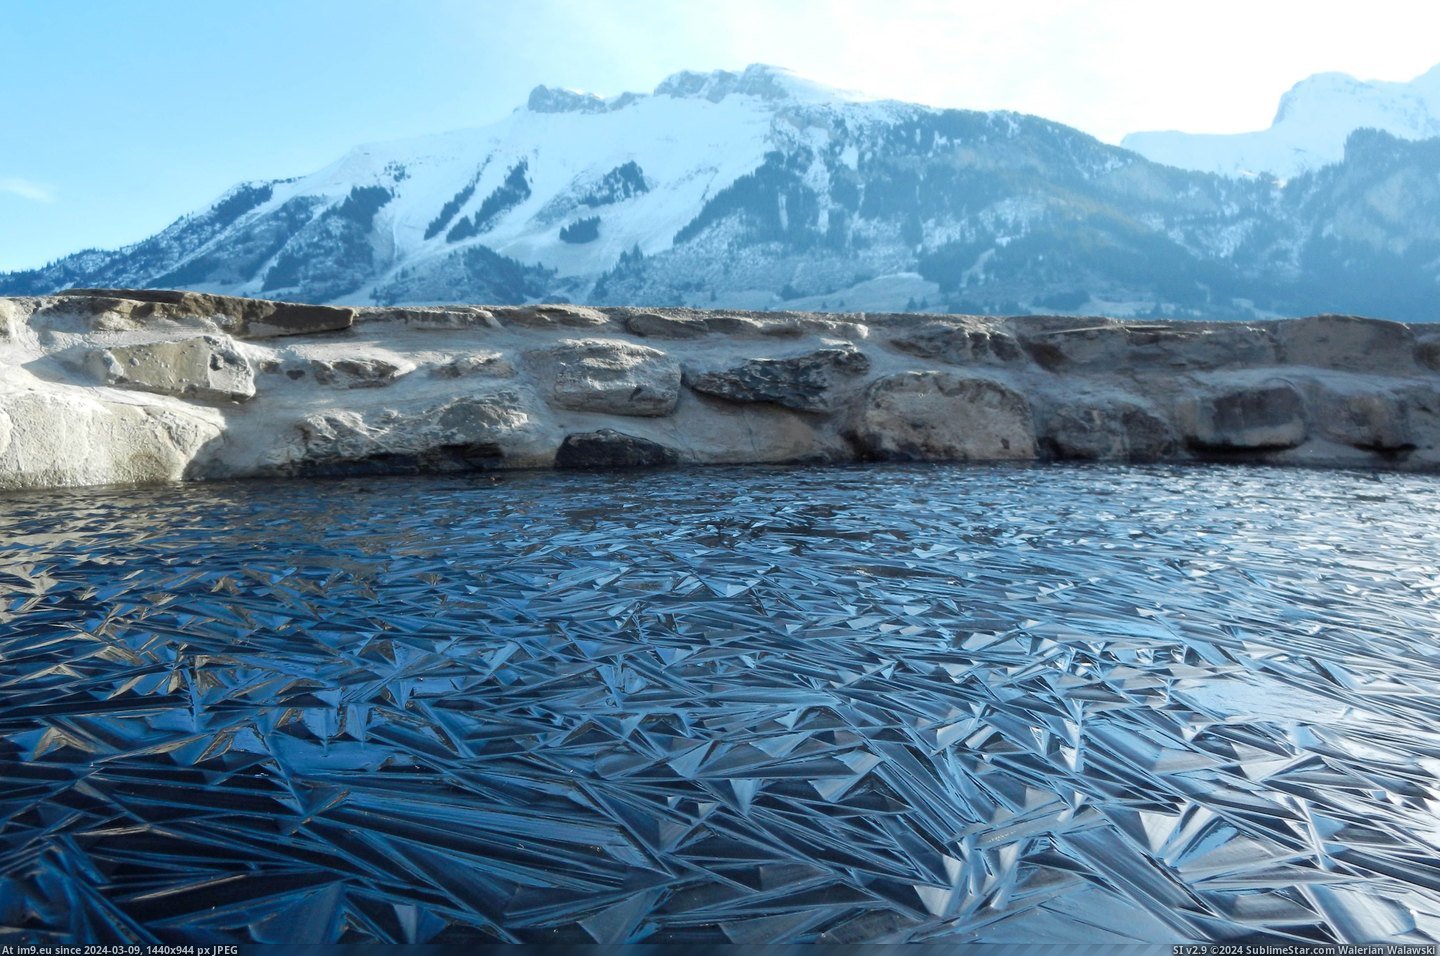 #Frozen #Pond #Switzerland [Pics] Frozen pond in Switzerland Pic. (Obraz z album My r/PICS favs))